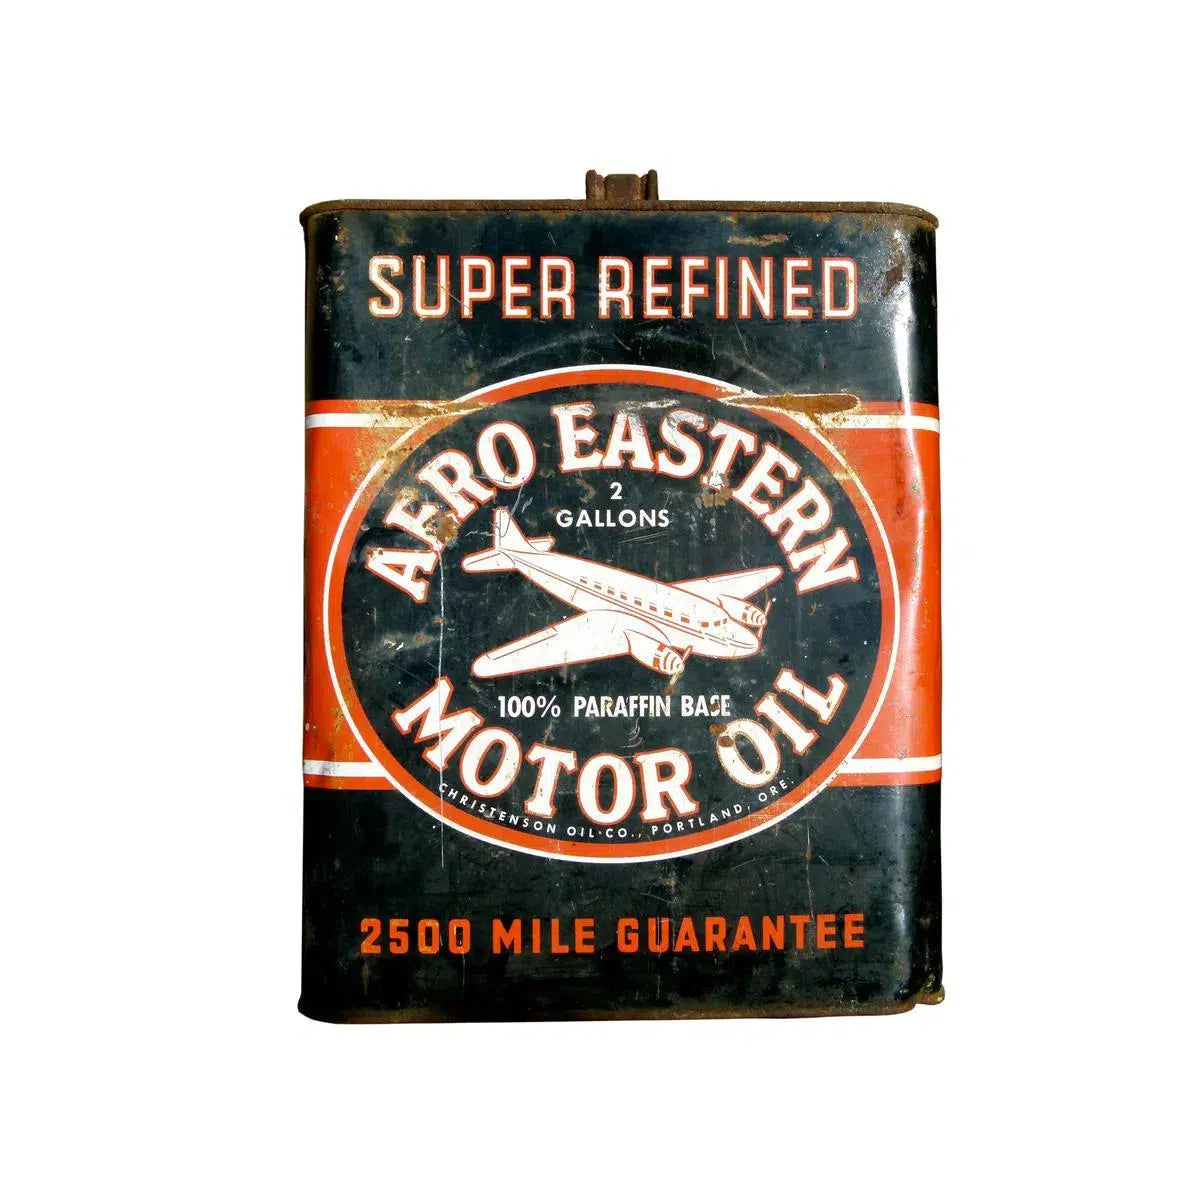 Aero Eastern Motor Oil, by Brad Beyer-PurePhoto